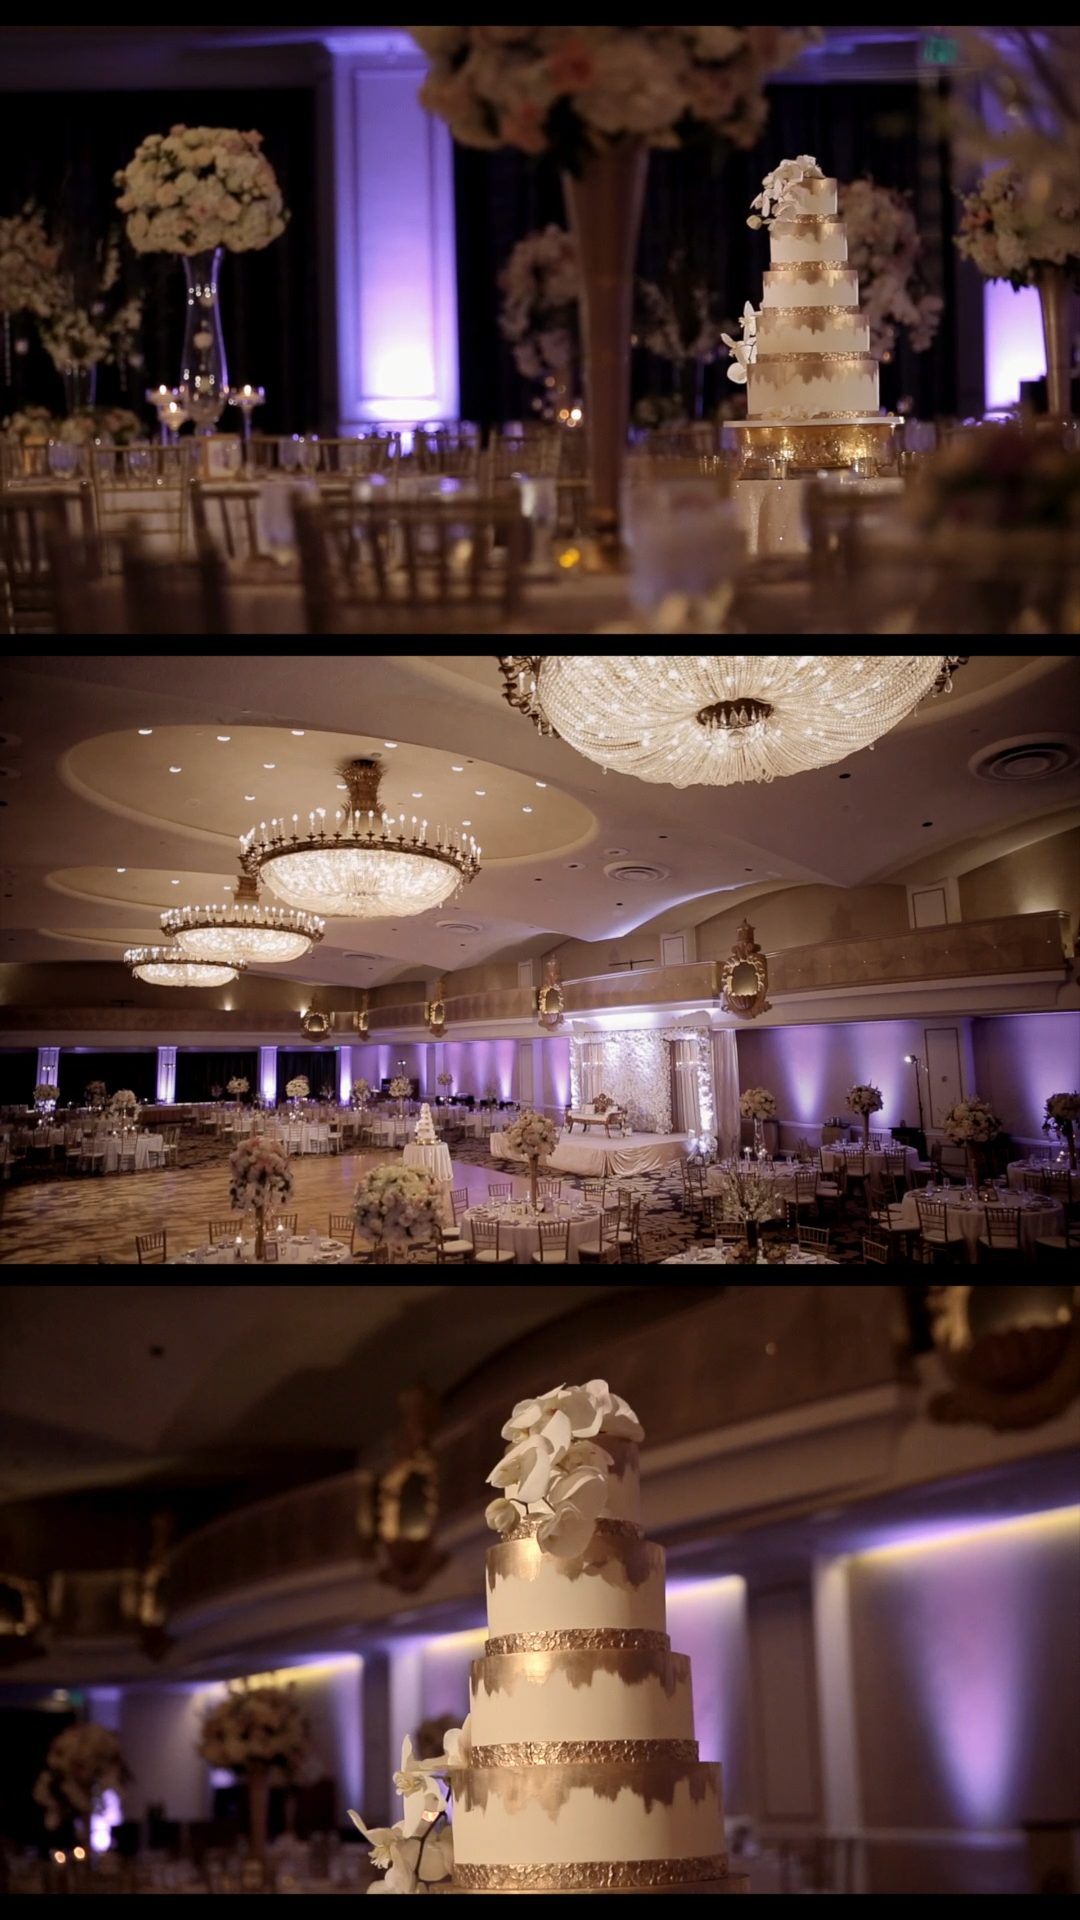 Indian Wedding Reception Decoration Ideas - Anias Events - White and Gold Reception Theme -   16 wedding Elegant luxury ideas